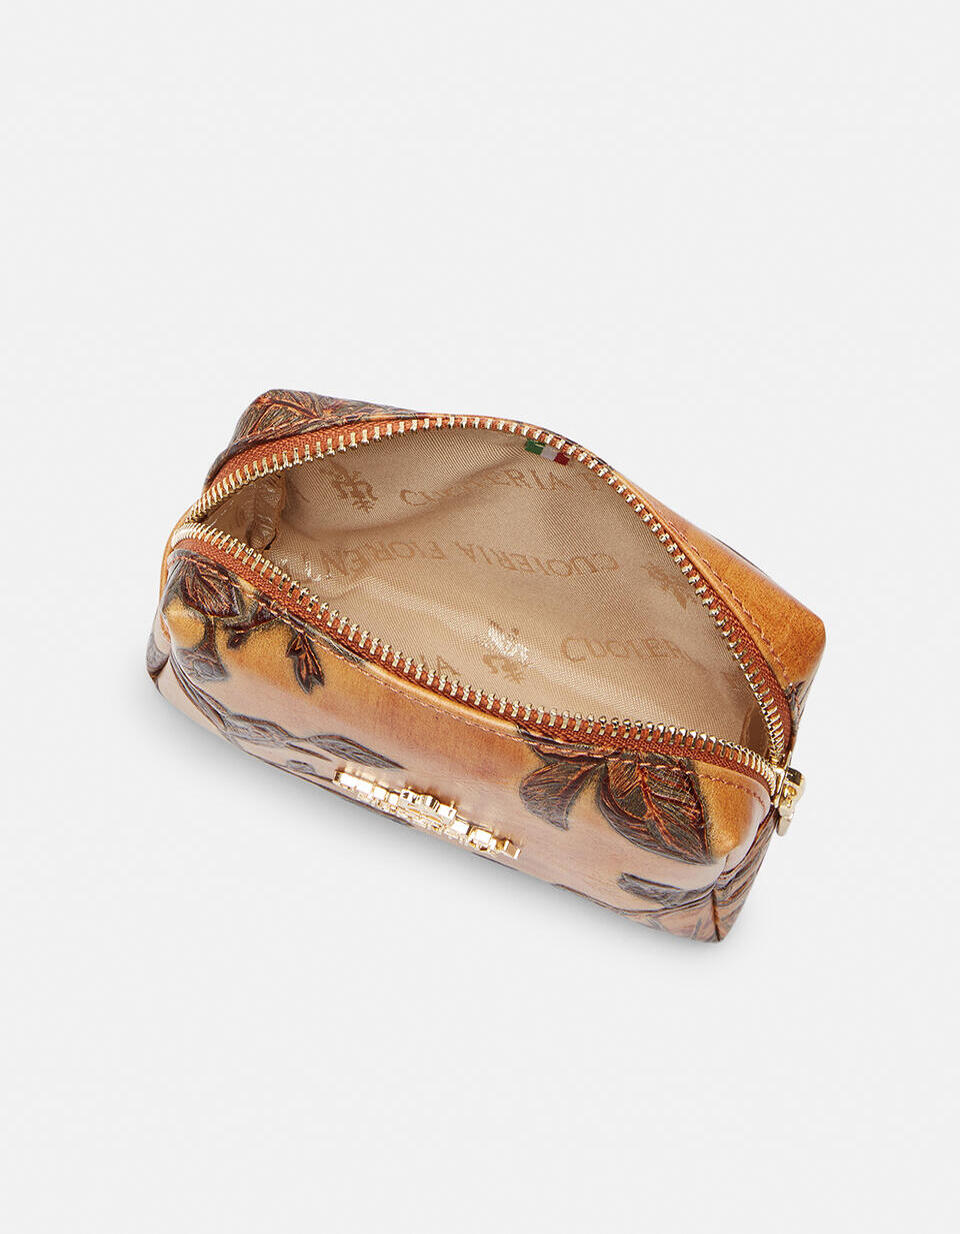 Calfskin printed Beauty-Case - Make Up Bags - Women's Accessories | Accessories Mimì BEIGE - Make Up Bags - Women's Accessories | AccessoriesCuoieria Fiorentina